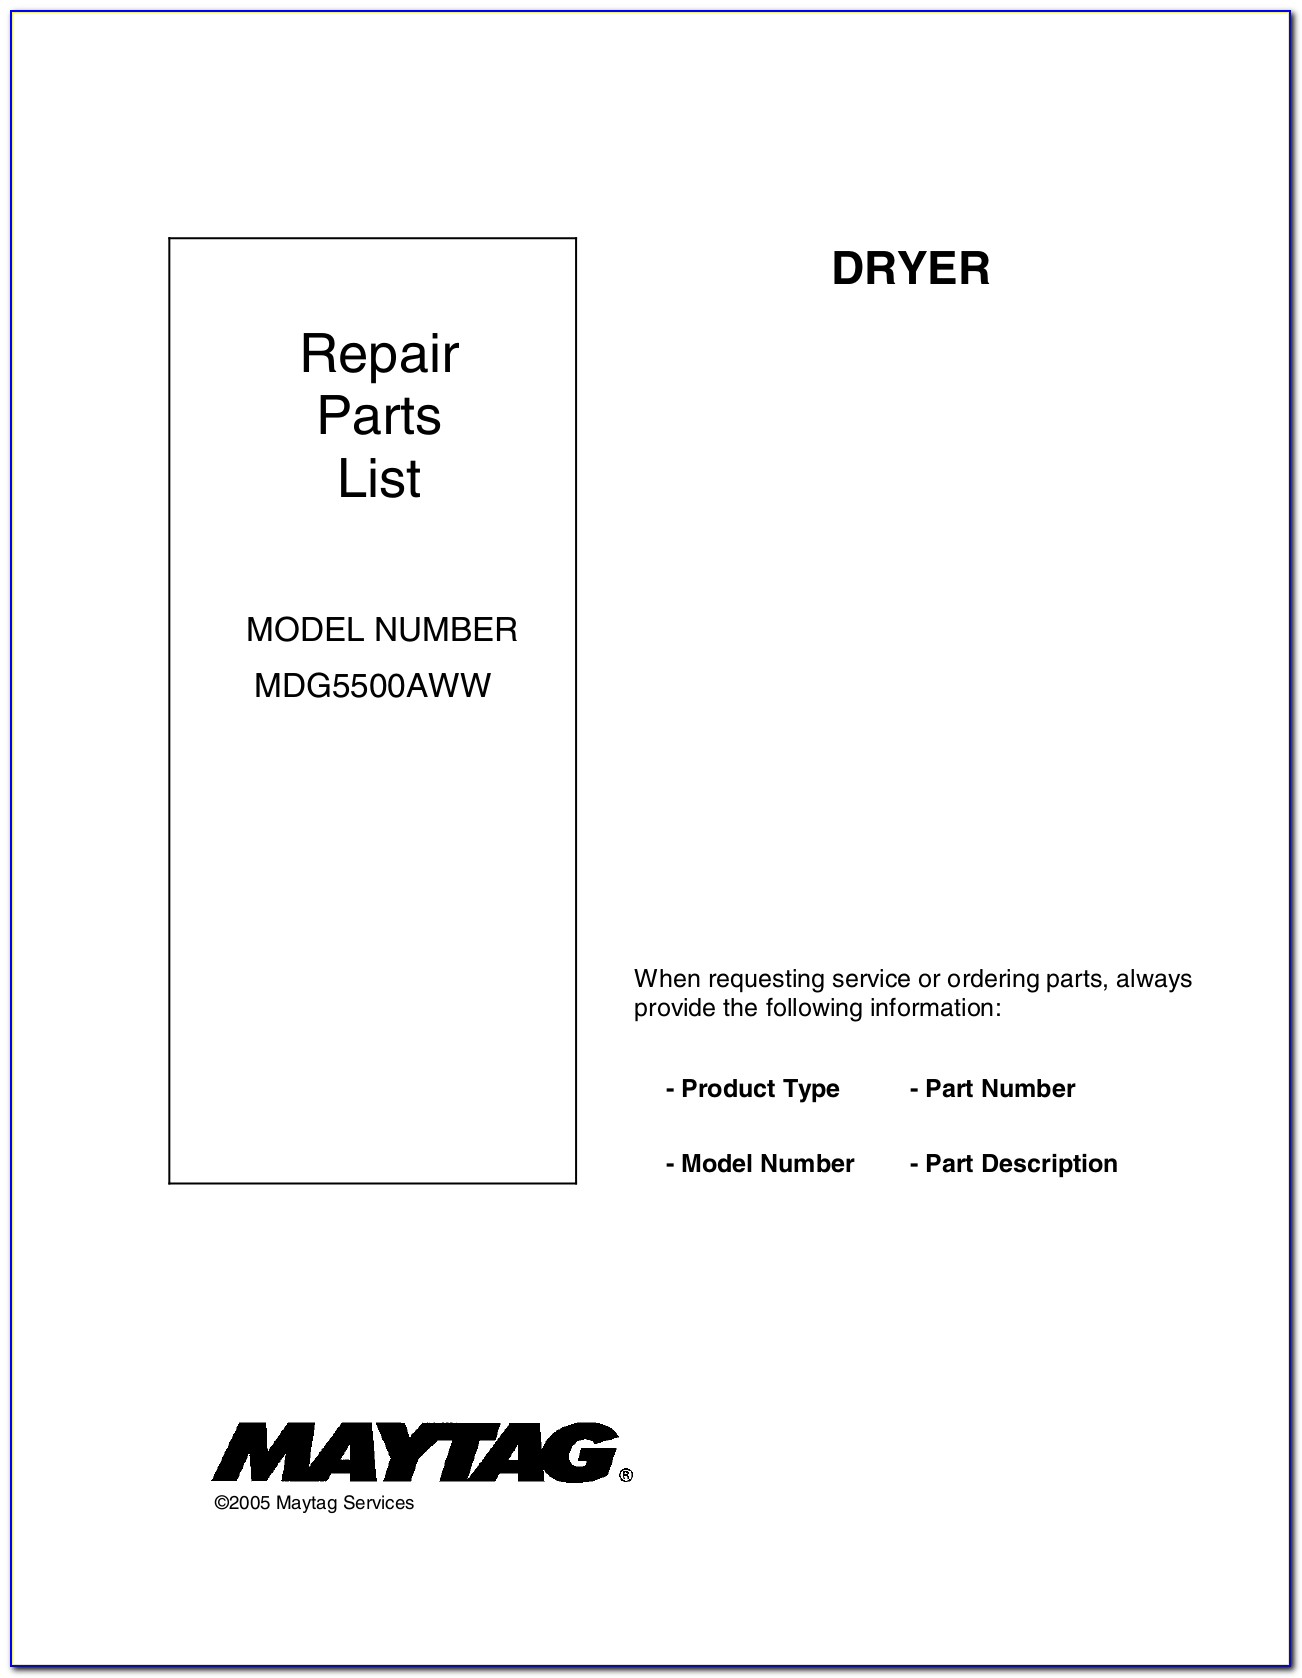 Maytag Clothes Dryer Repair Manual